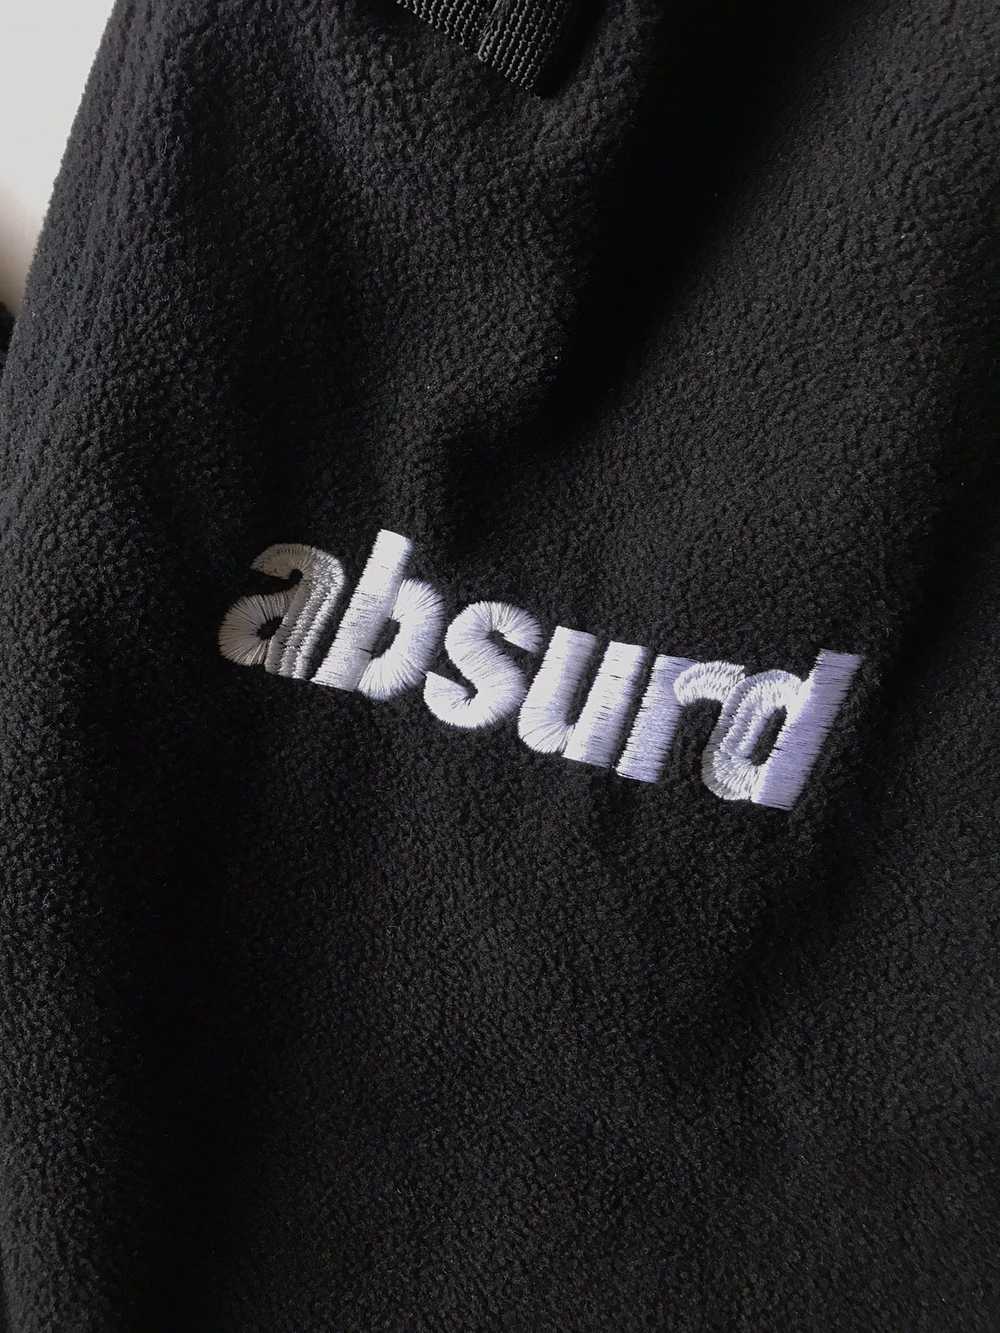 Absurd Absurd Microfleece Sweats, SMALL Black - image 2